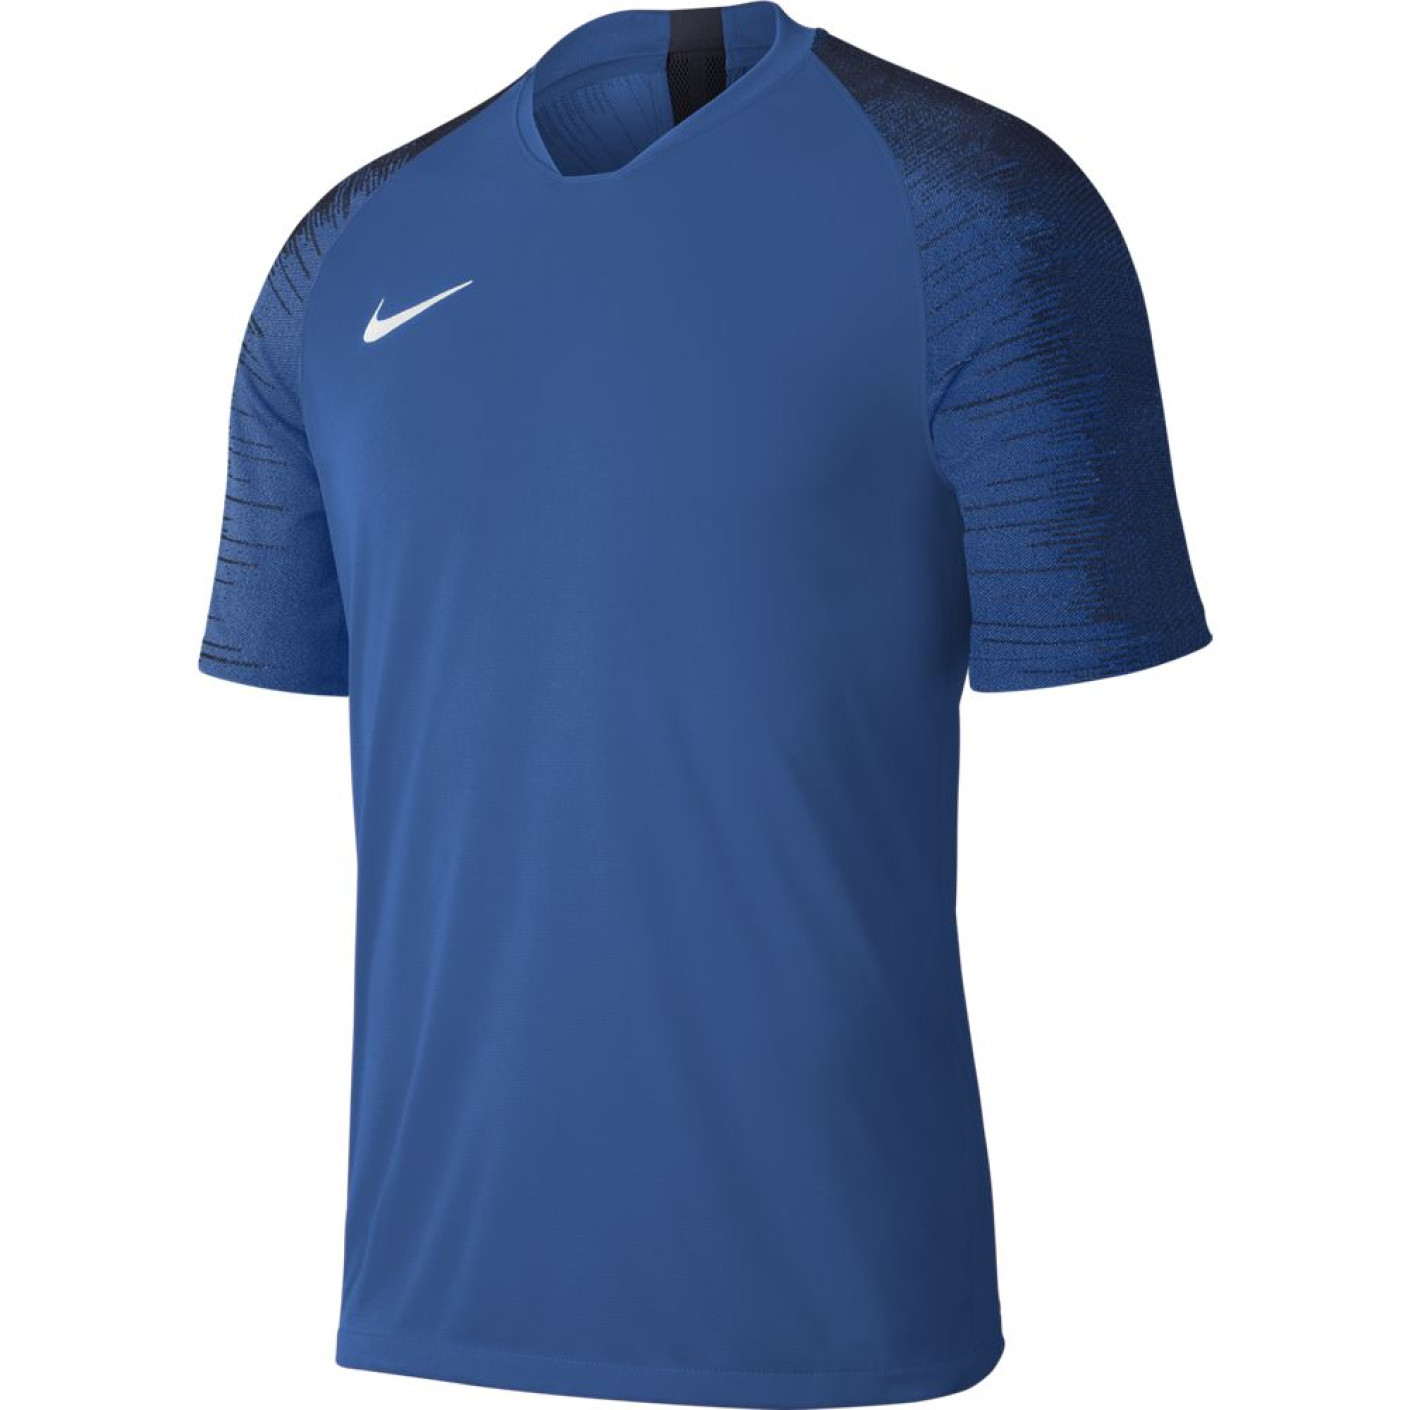 Nike Dry Strike Voetbalshirt Royal Blauw Wit